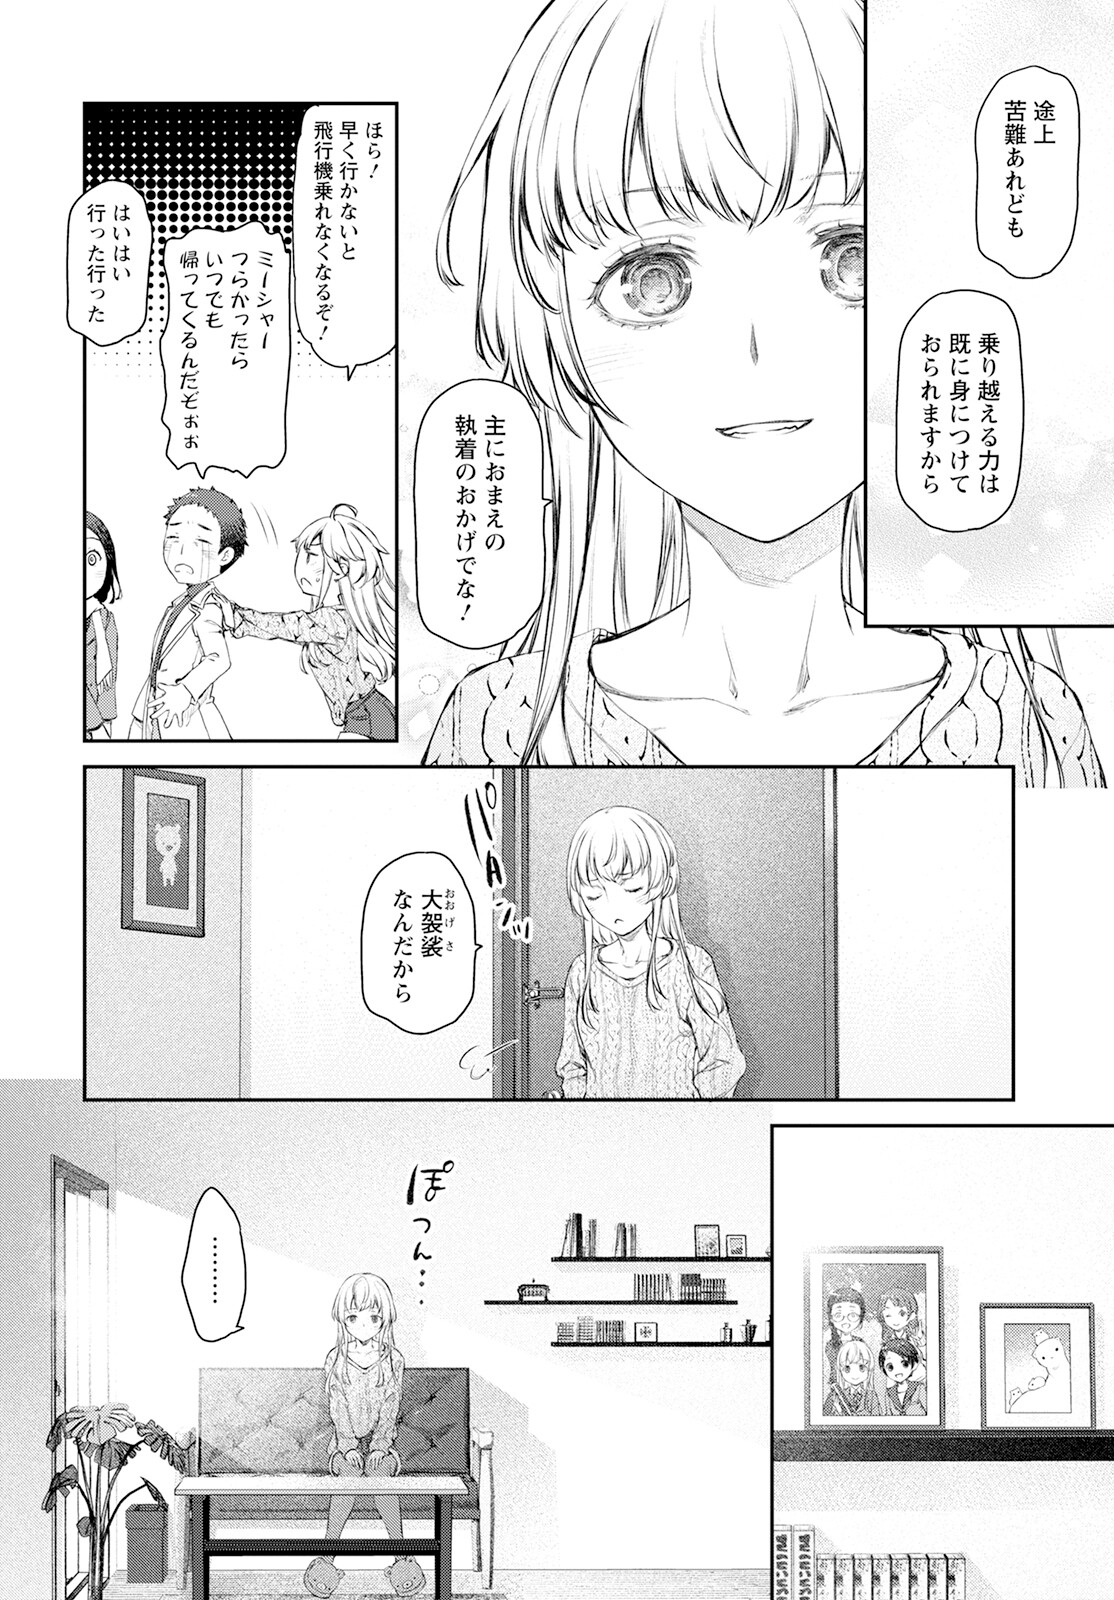 Uchi no Maid ga Uzasugiru! - Chapter 58 - Page 28